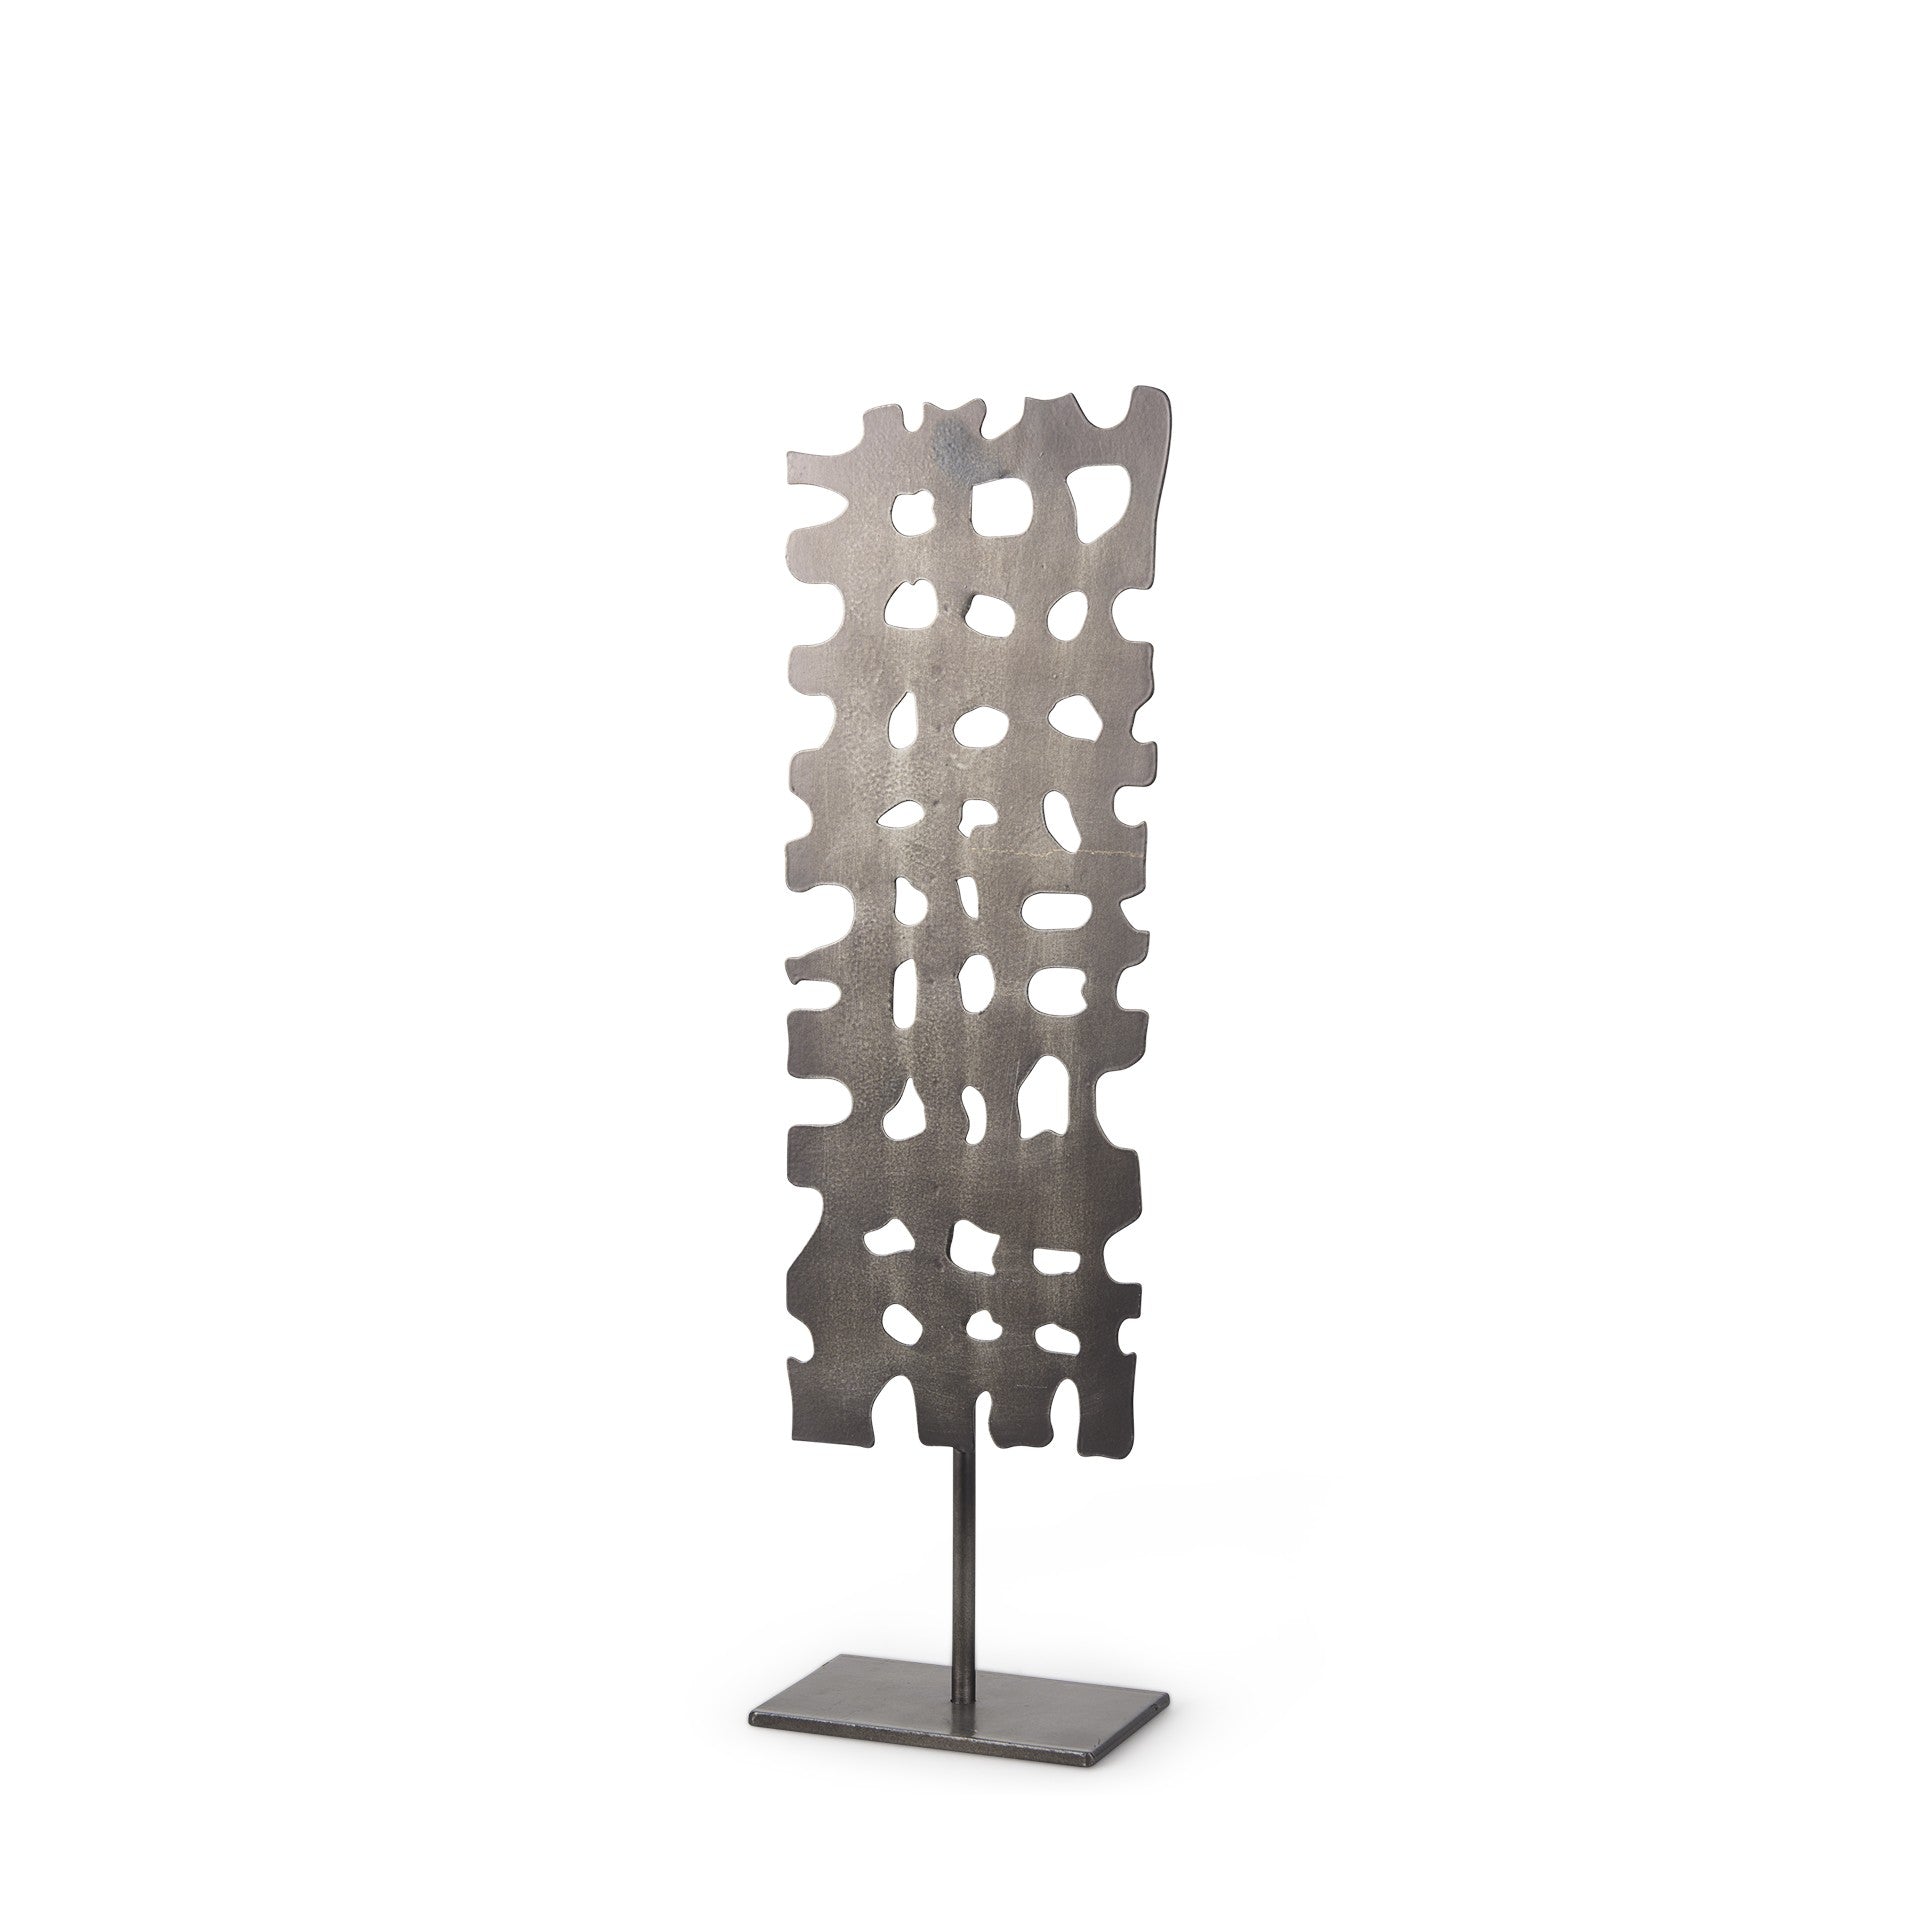 18" Gray Metal Sculpture Tabletop Sculpture